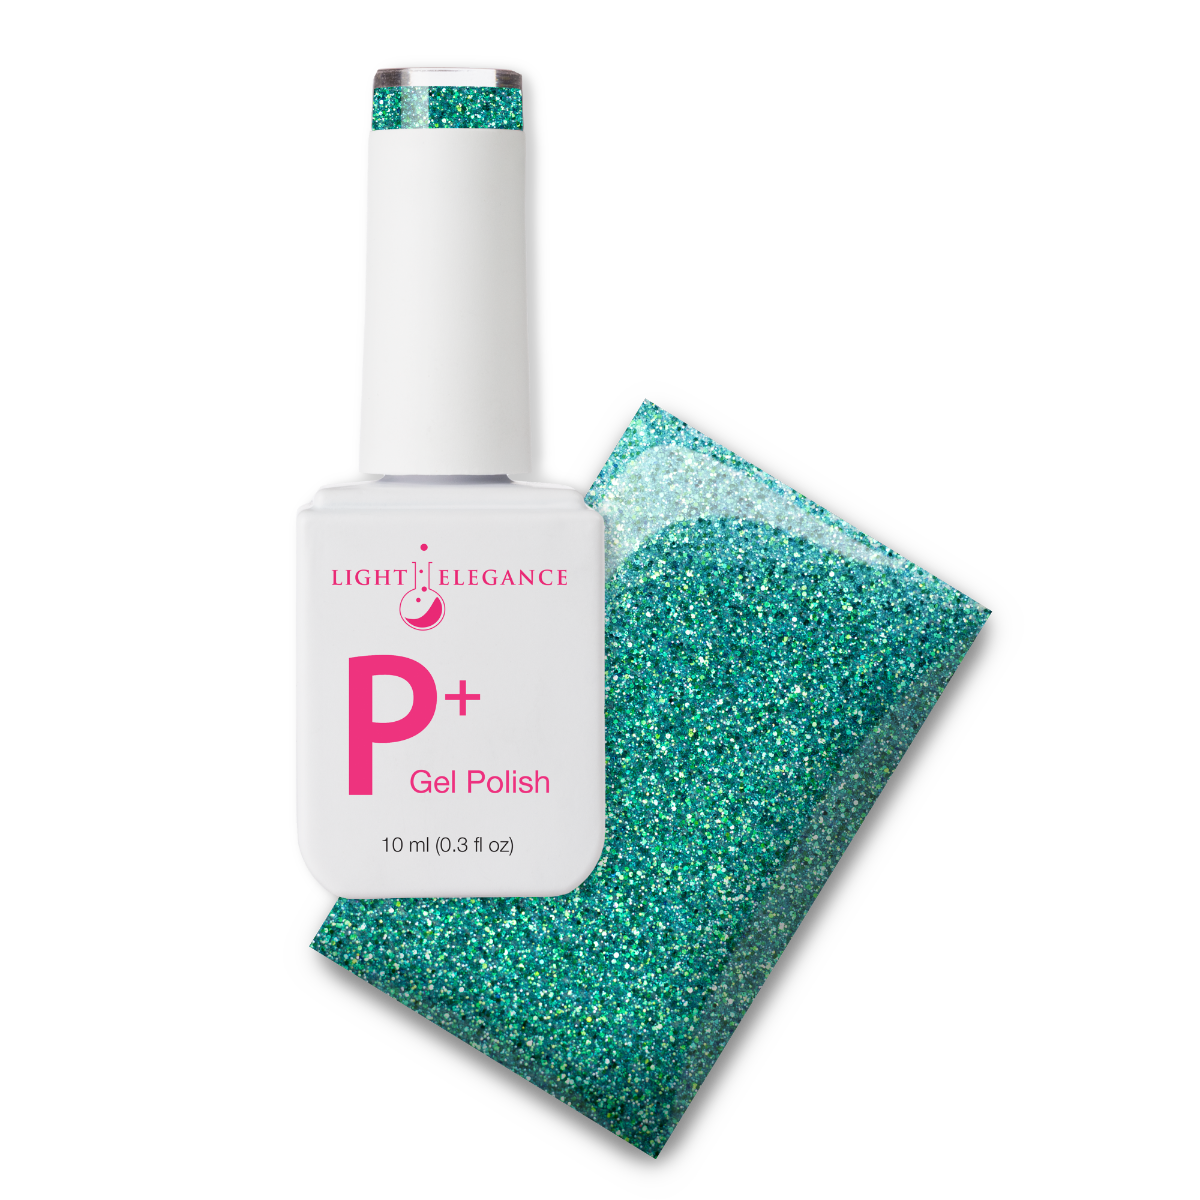 Light Elegance P+ Soak Off Glitter Gel - Standing Ovation :: New Packaging - Creata Beauty - Professional Beauty Products